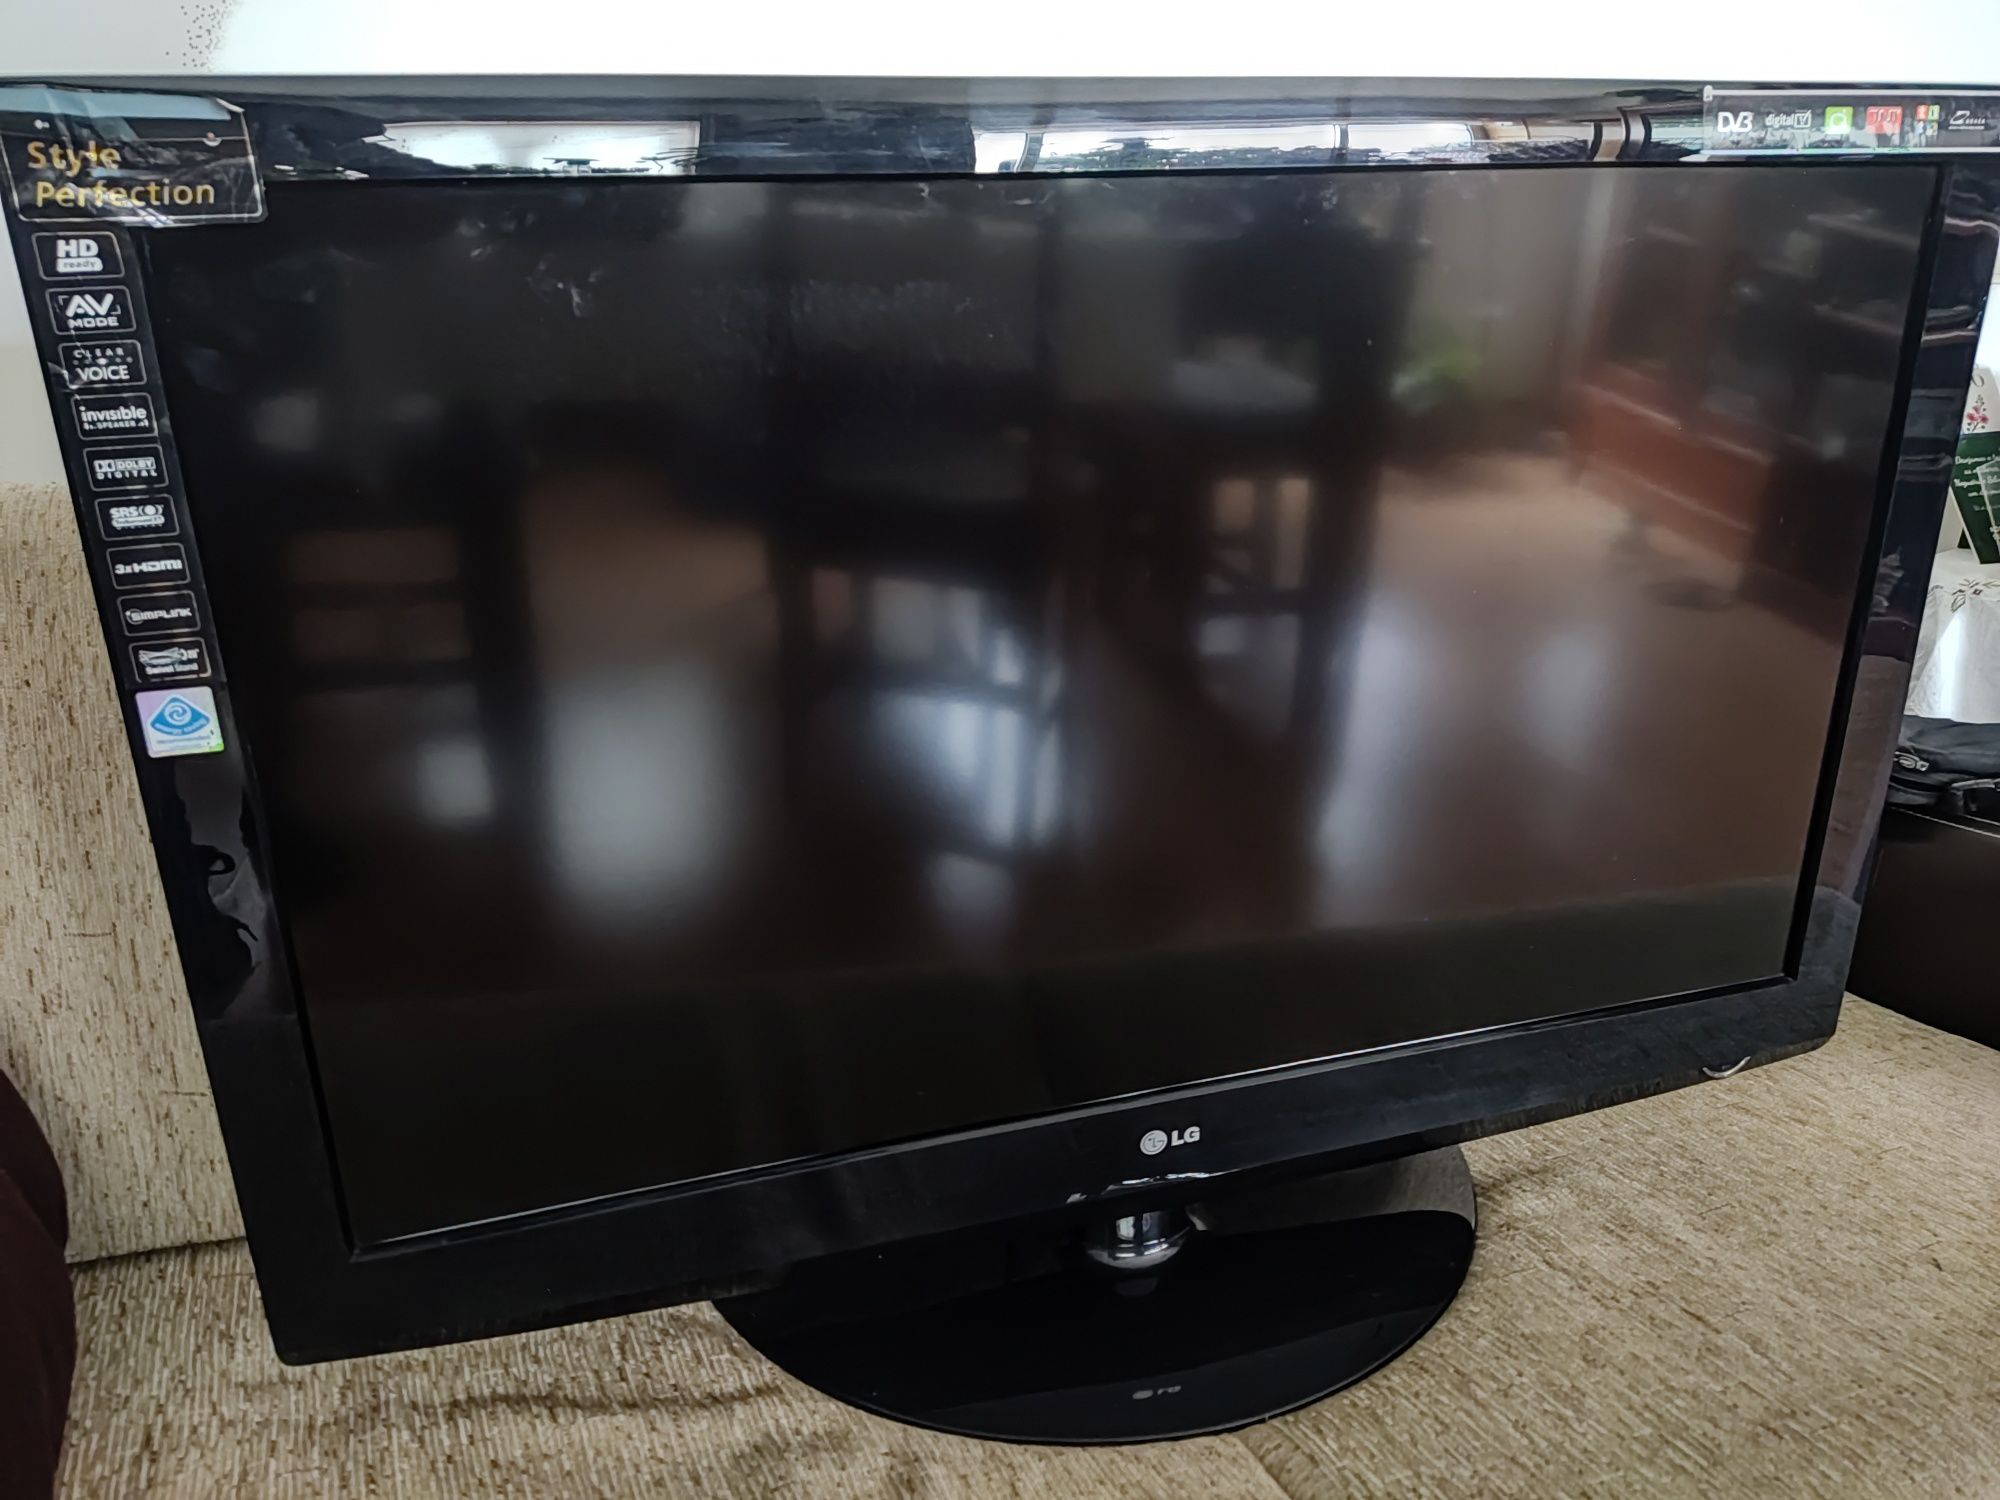 TV LCD LG 42LG3000 com Avaria, 42 polegadas